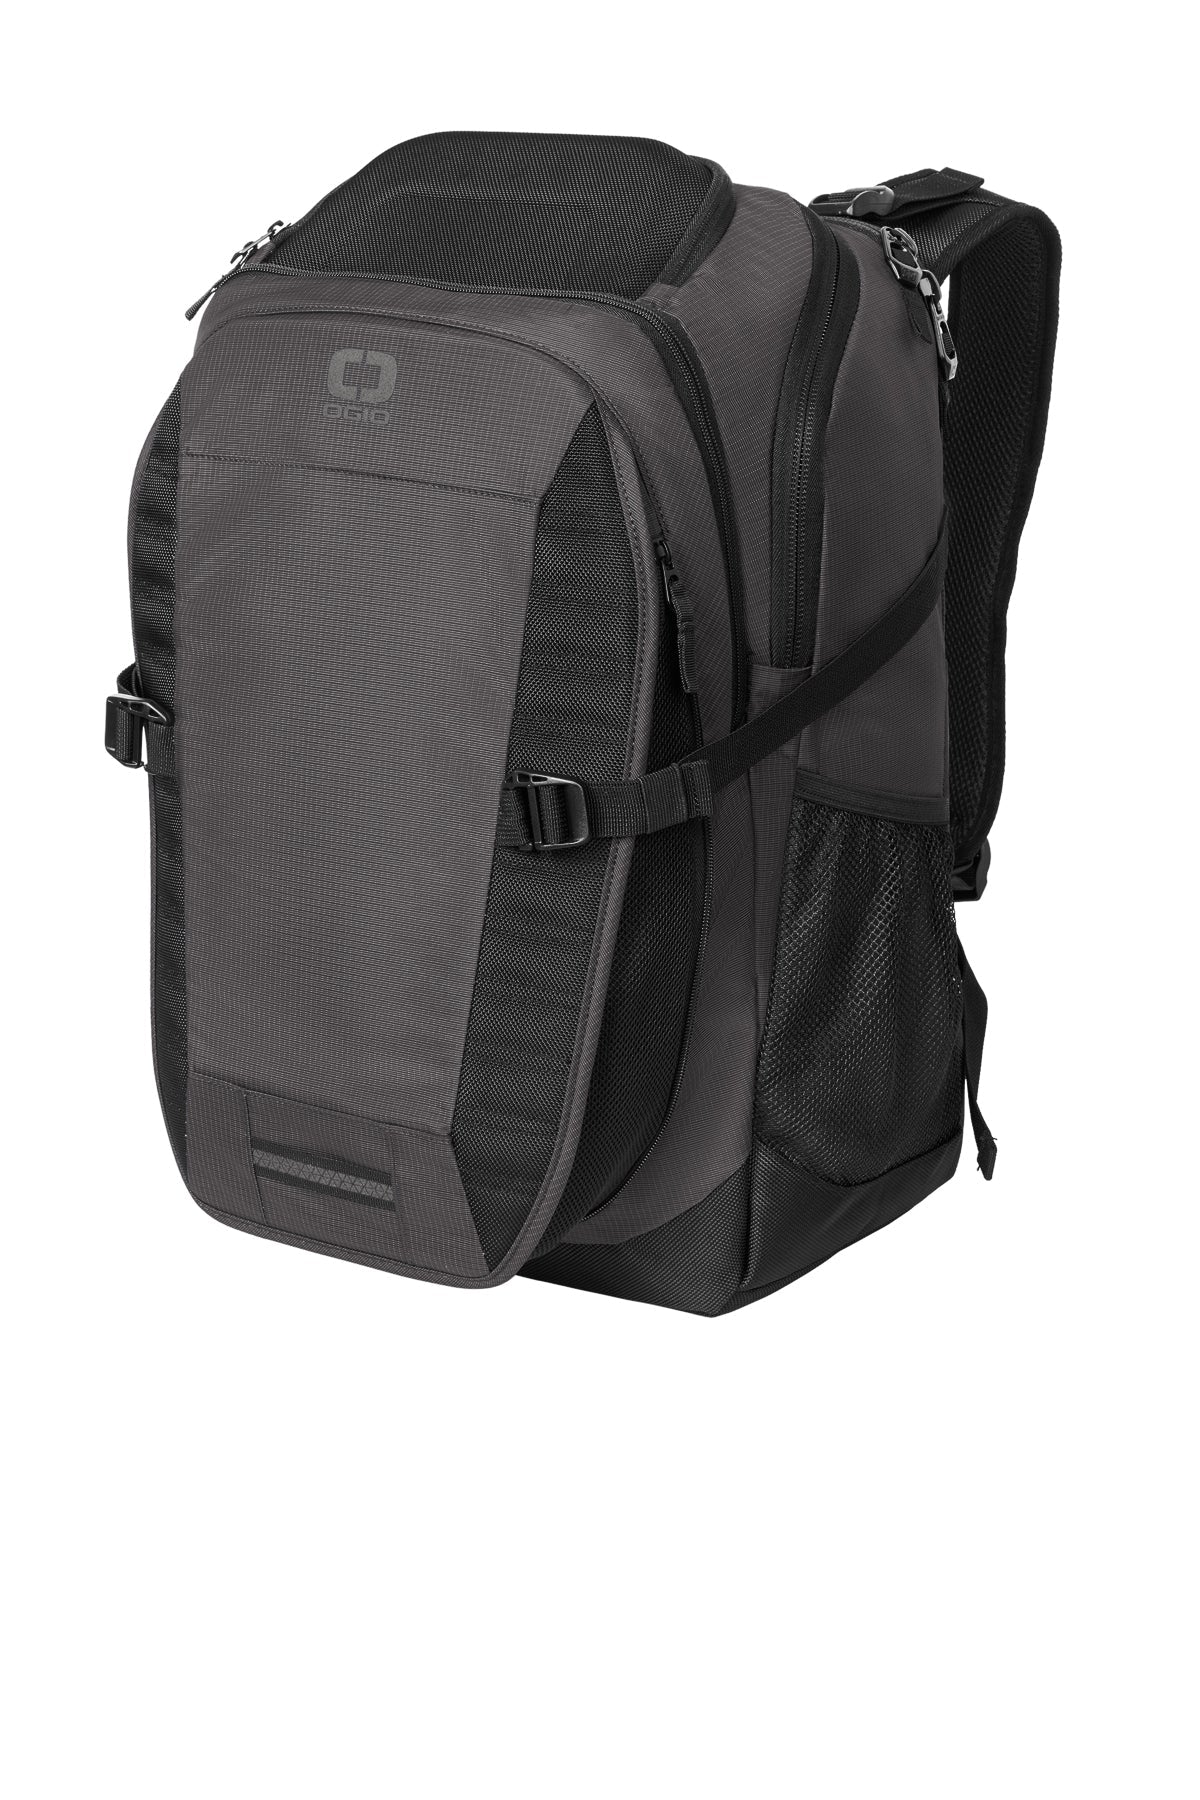 OGIO Motion X-Over Customzied Backpacks, Diesel Grey